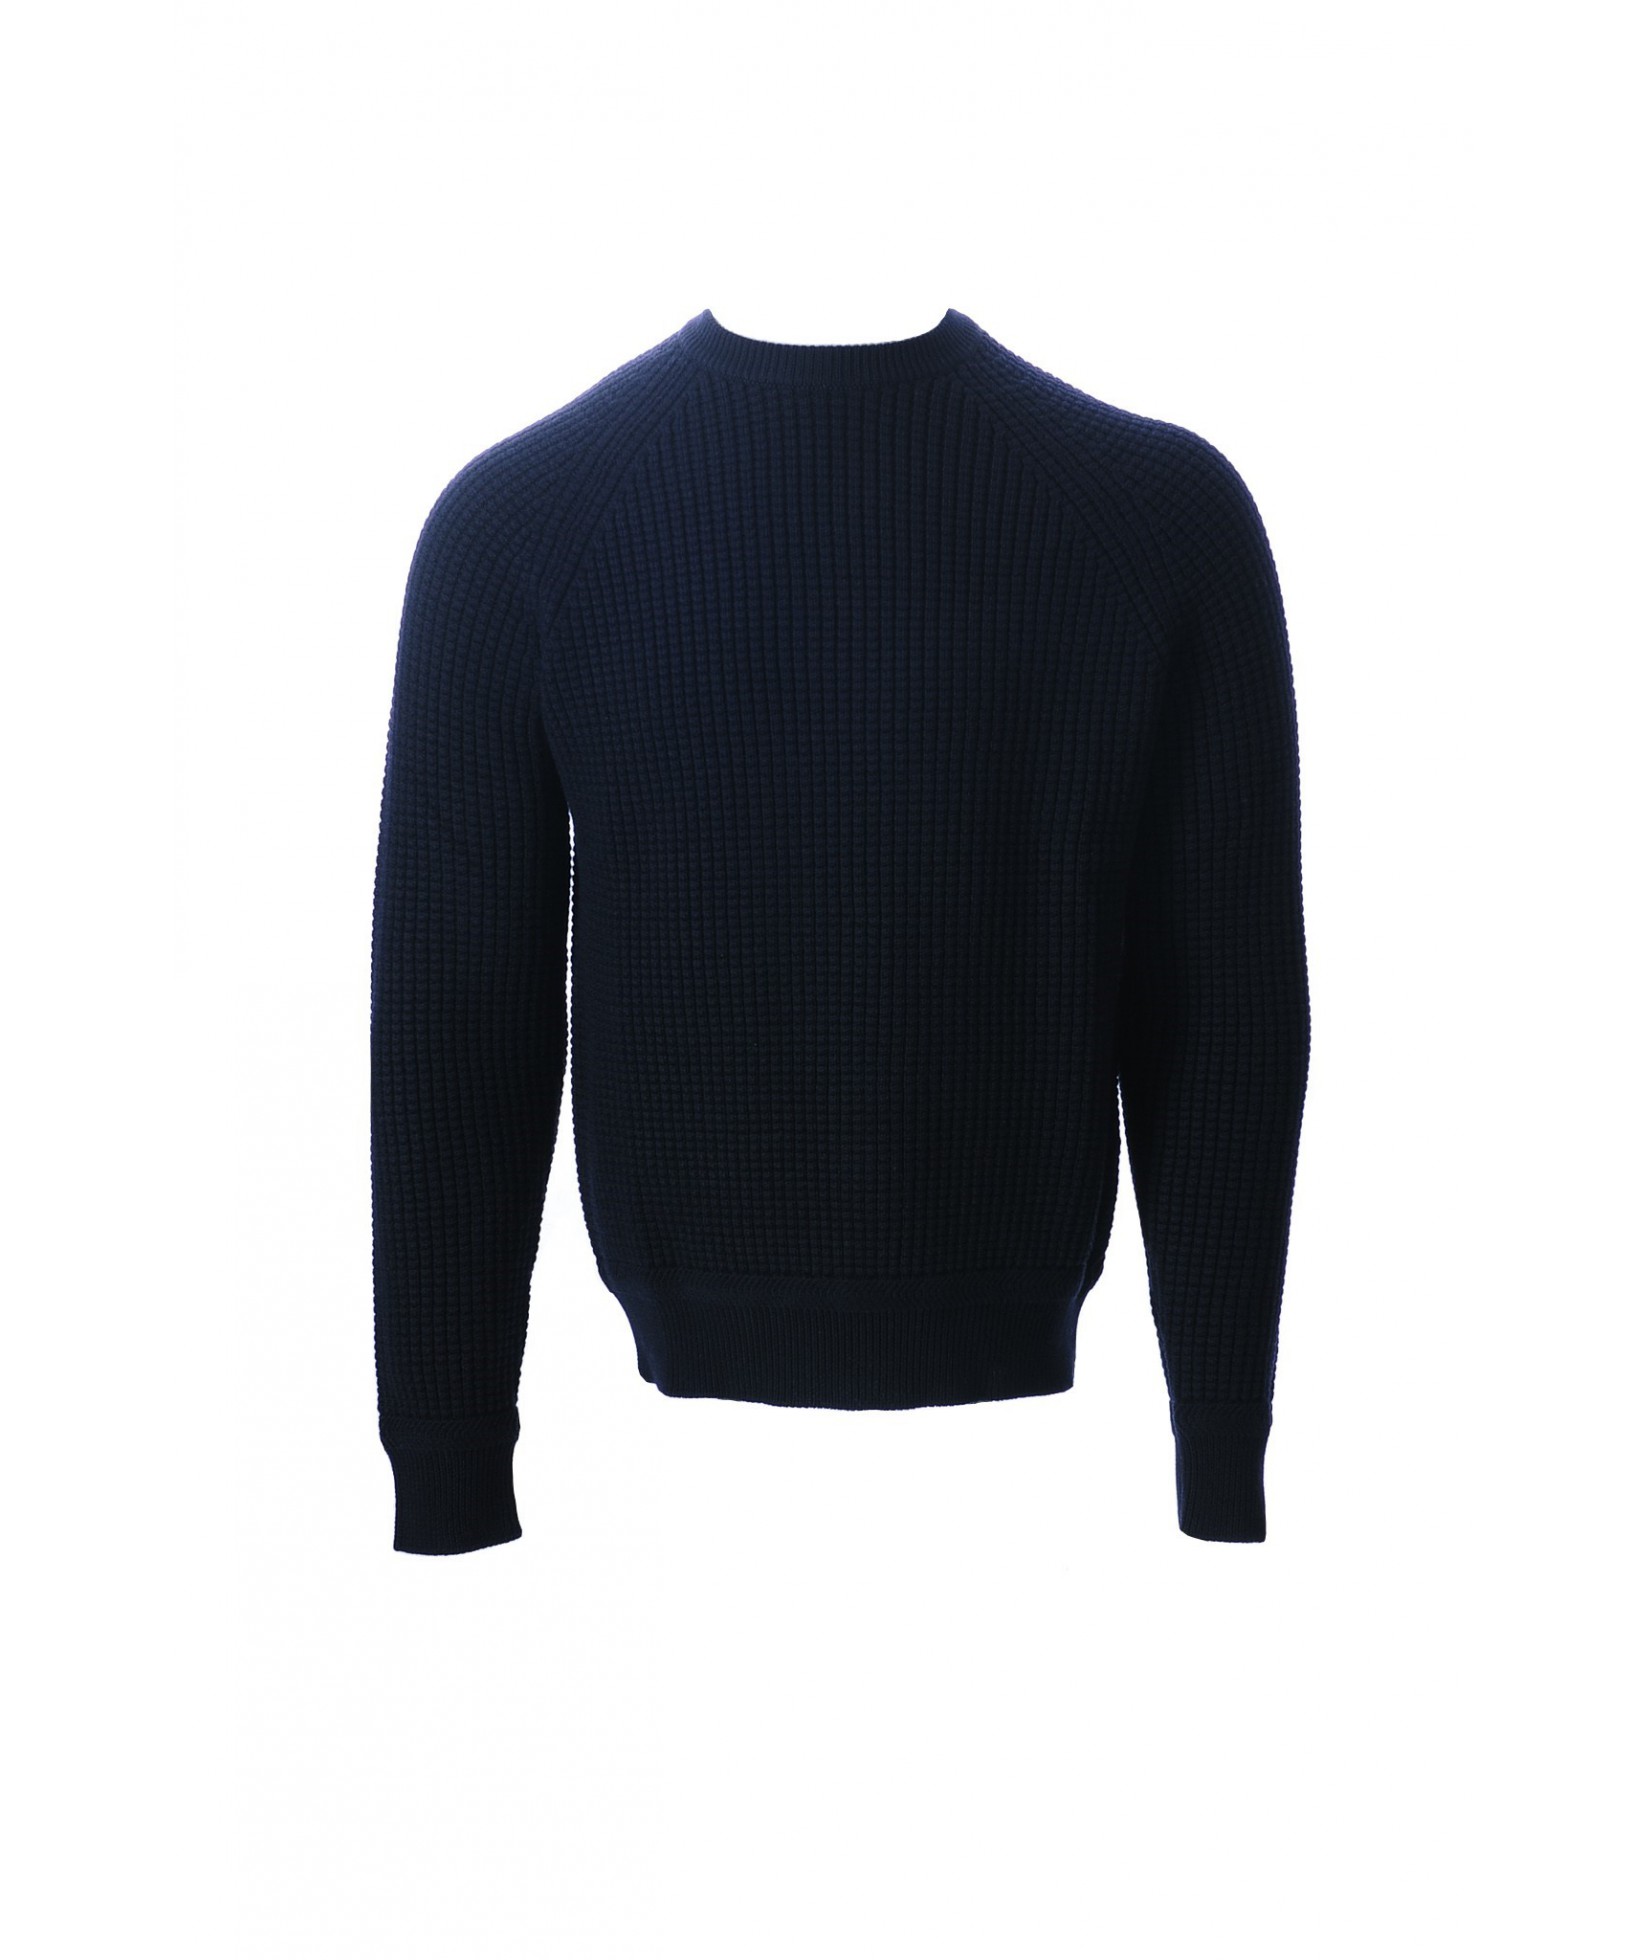 Jacob Cohën sweater dunkelblau  (36303)